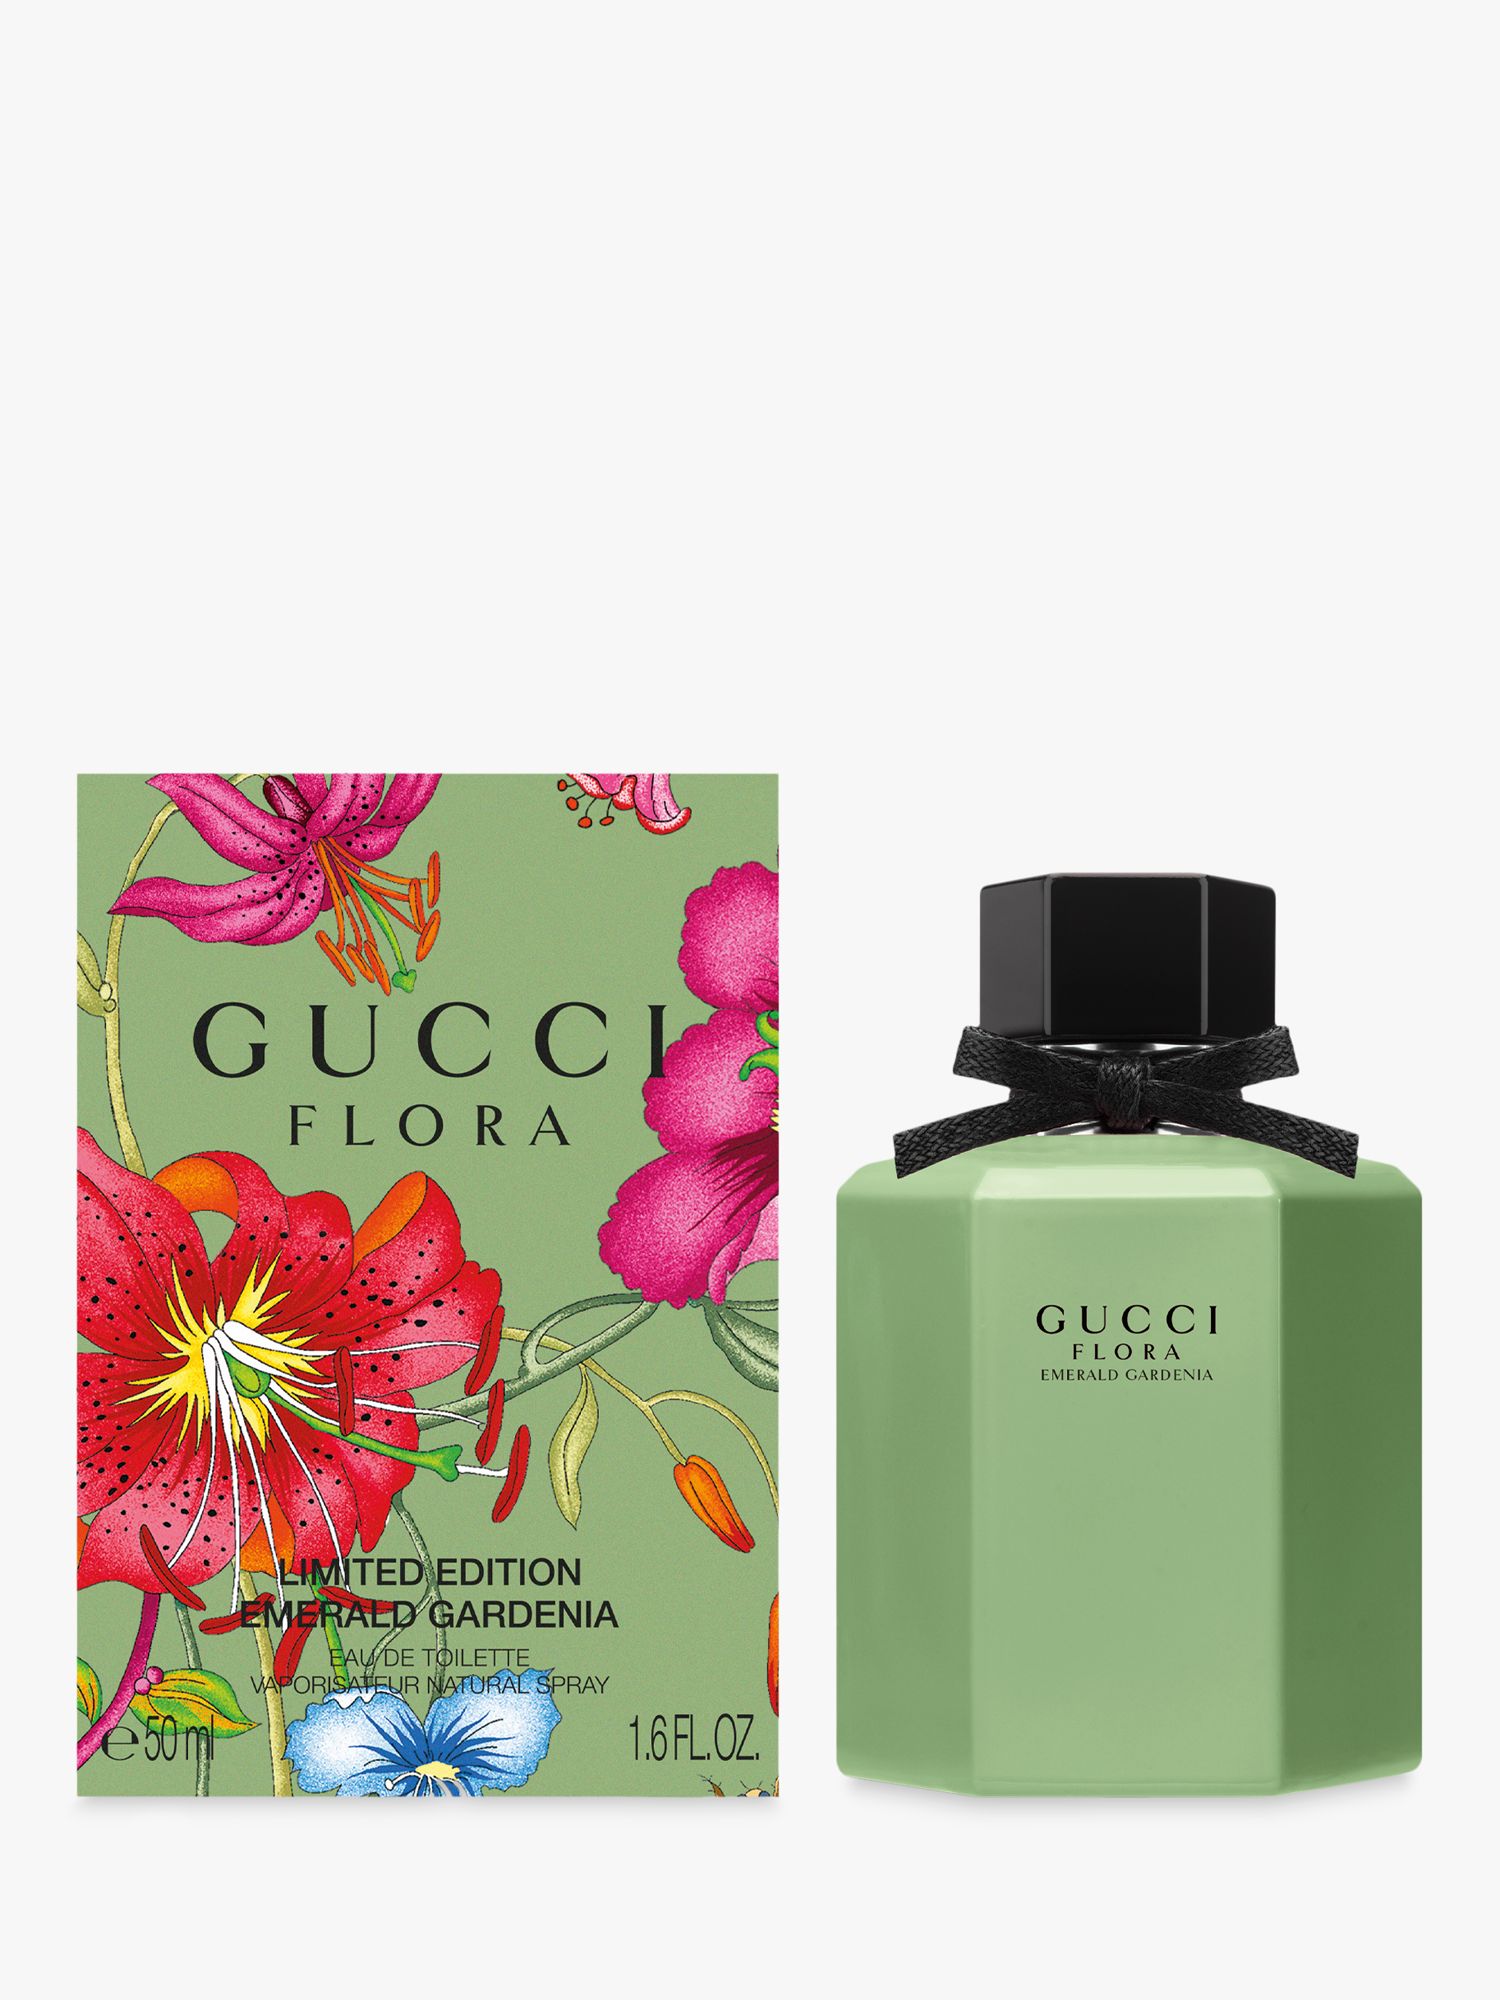 Gucci Flora Emerald Gardenia Eau de 